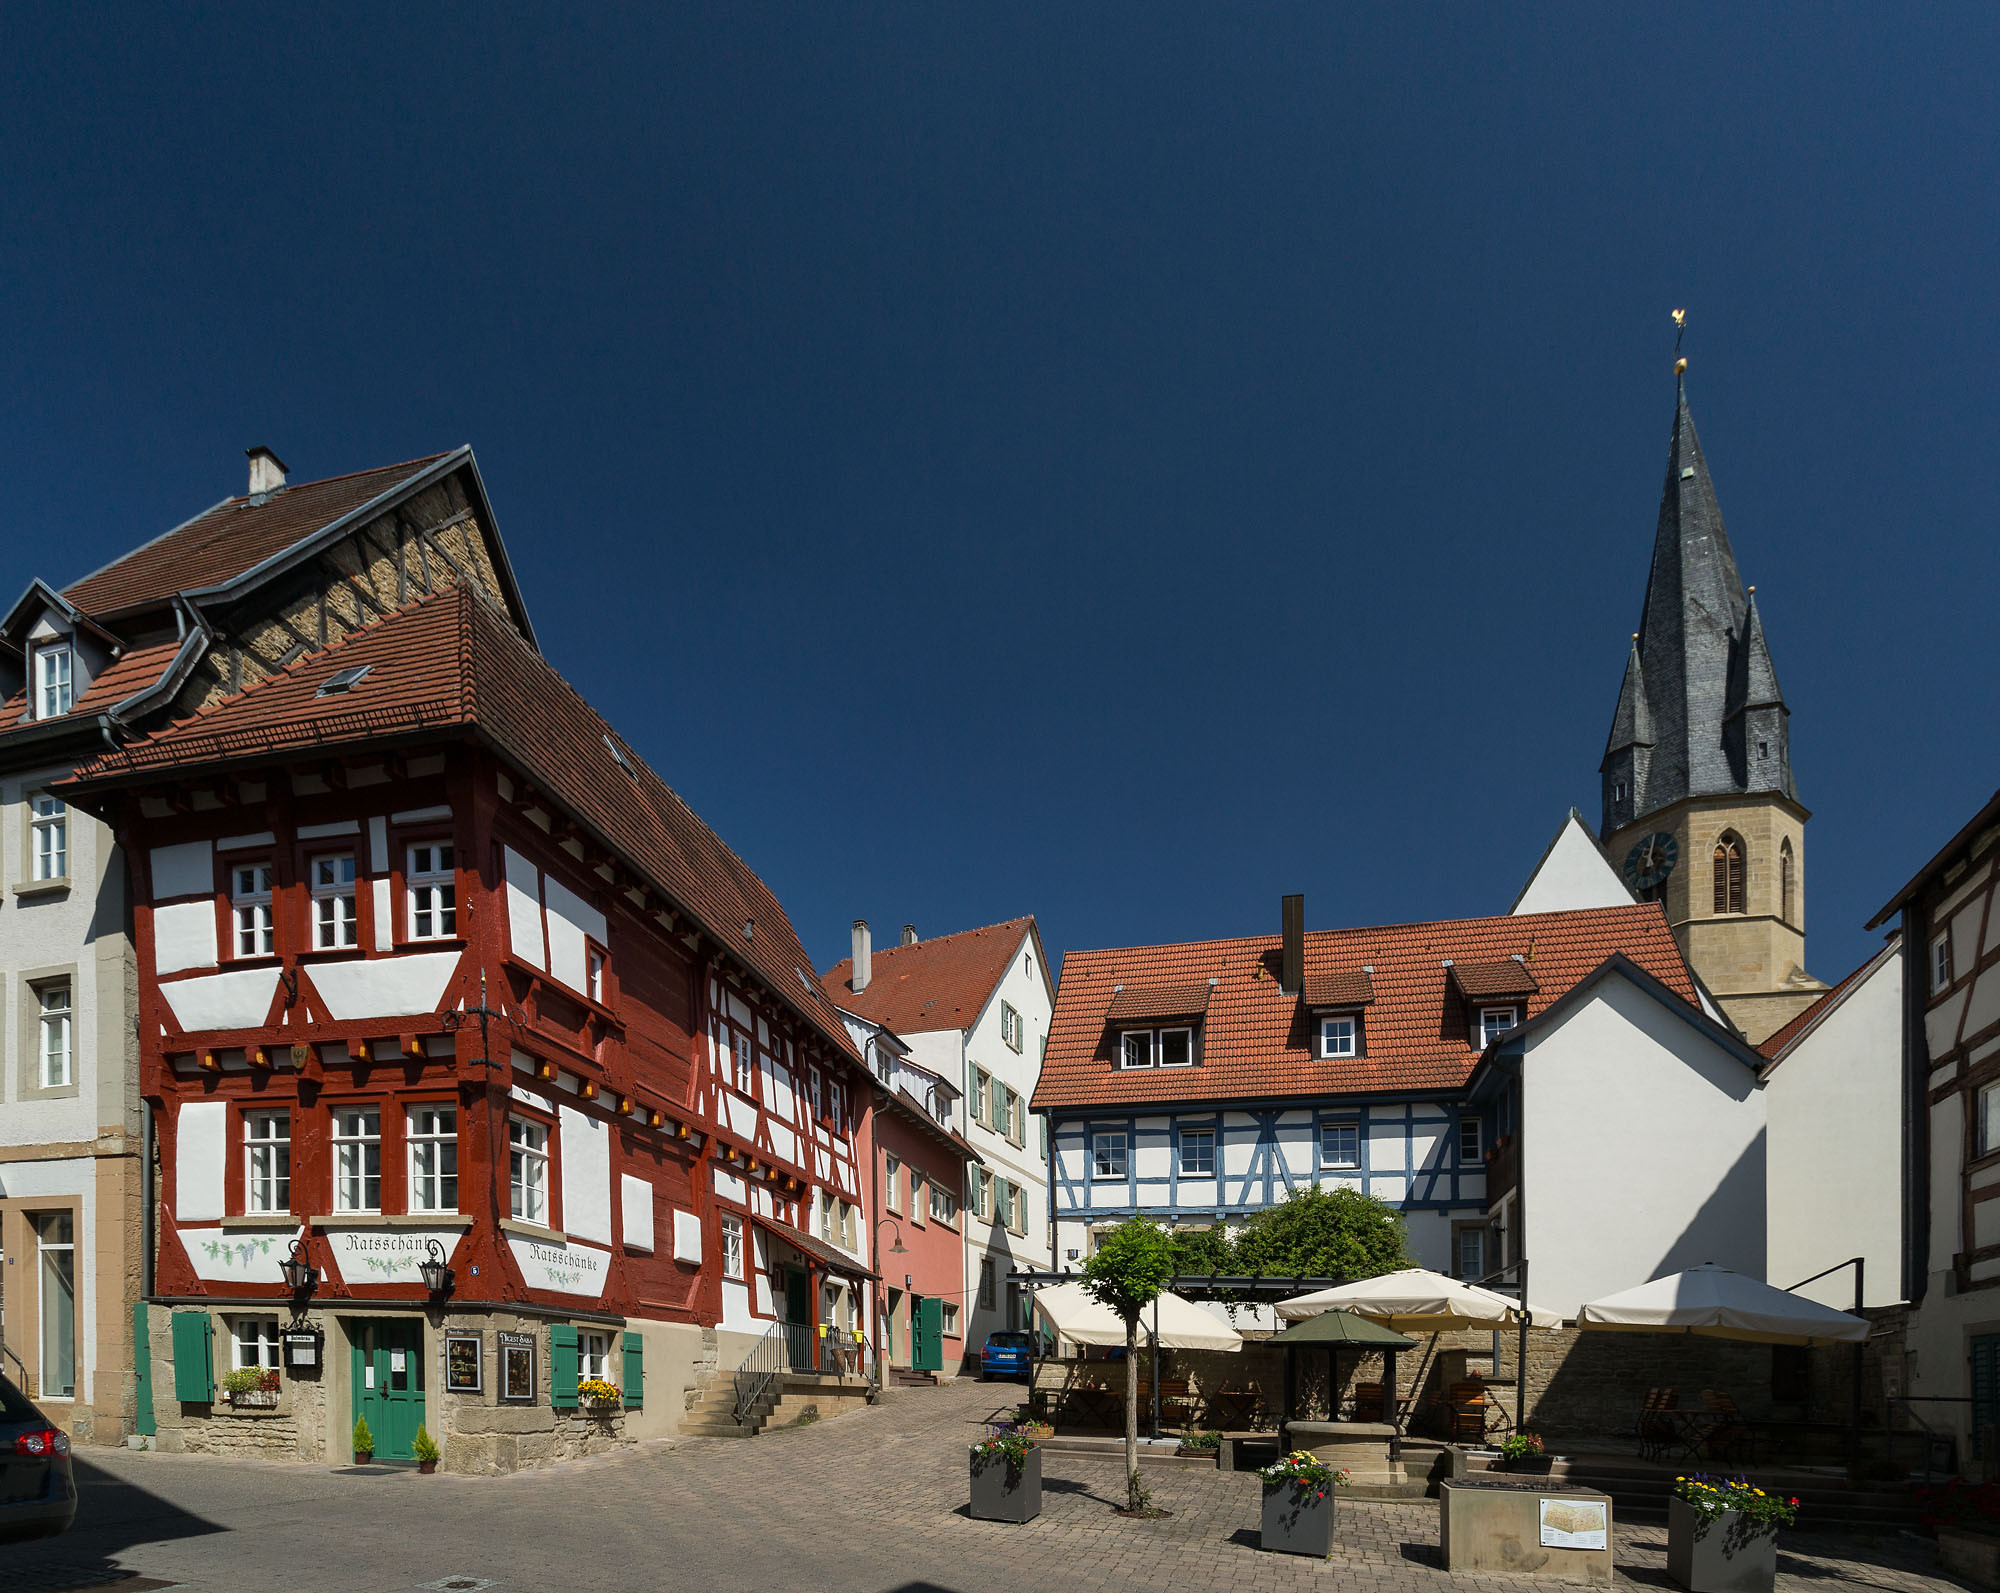 Mittelalterlicher Marktplatz in Eppingen, Altstadtstraße